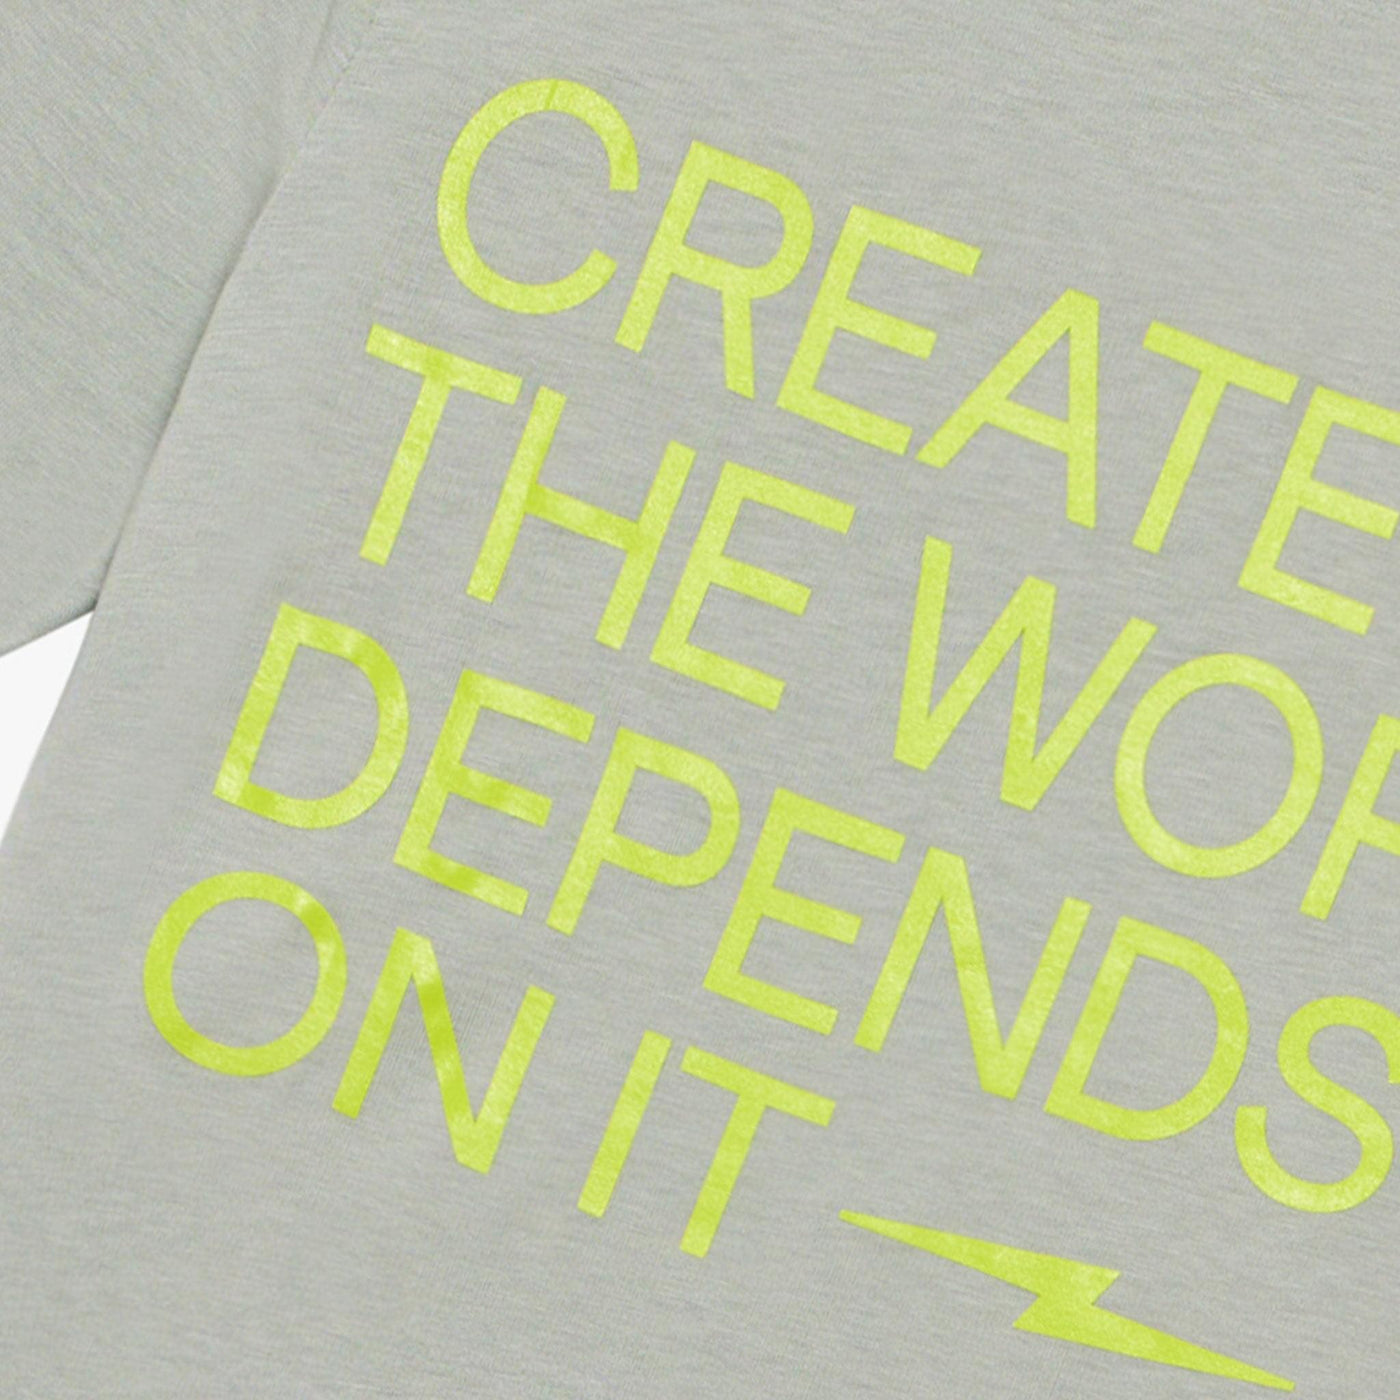 Men's LegacyTech T-Shirt - Slate - Create